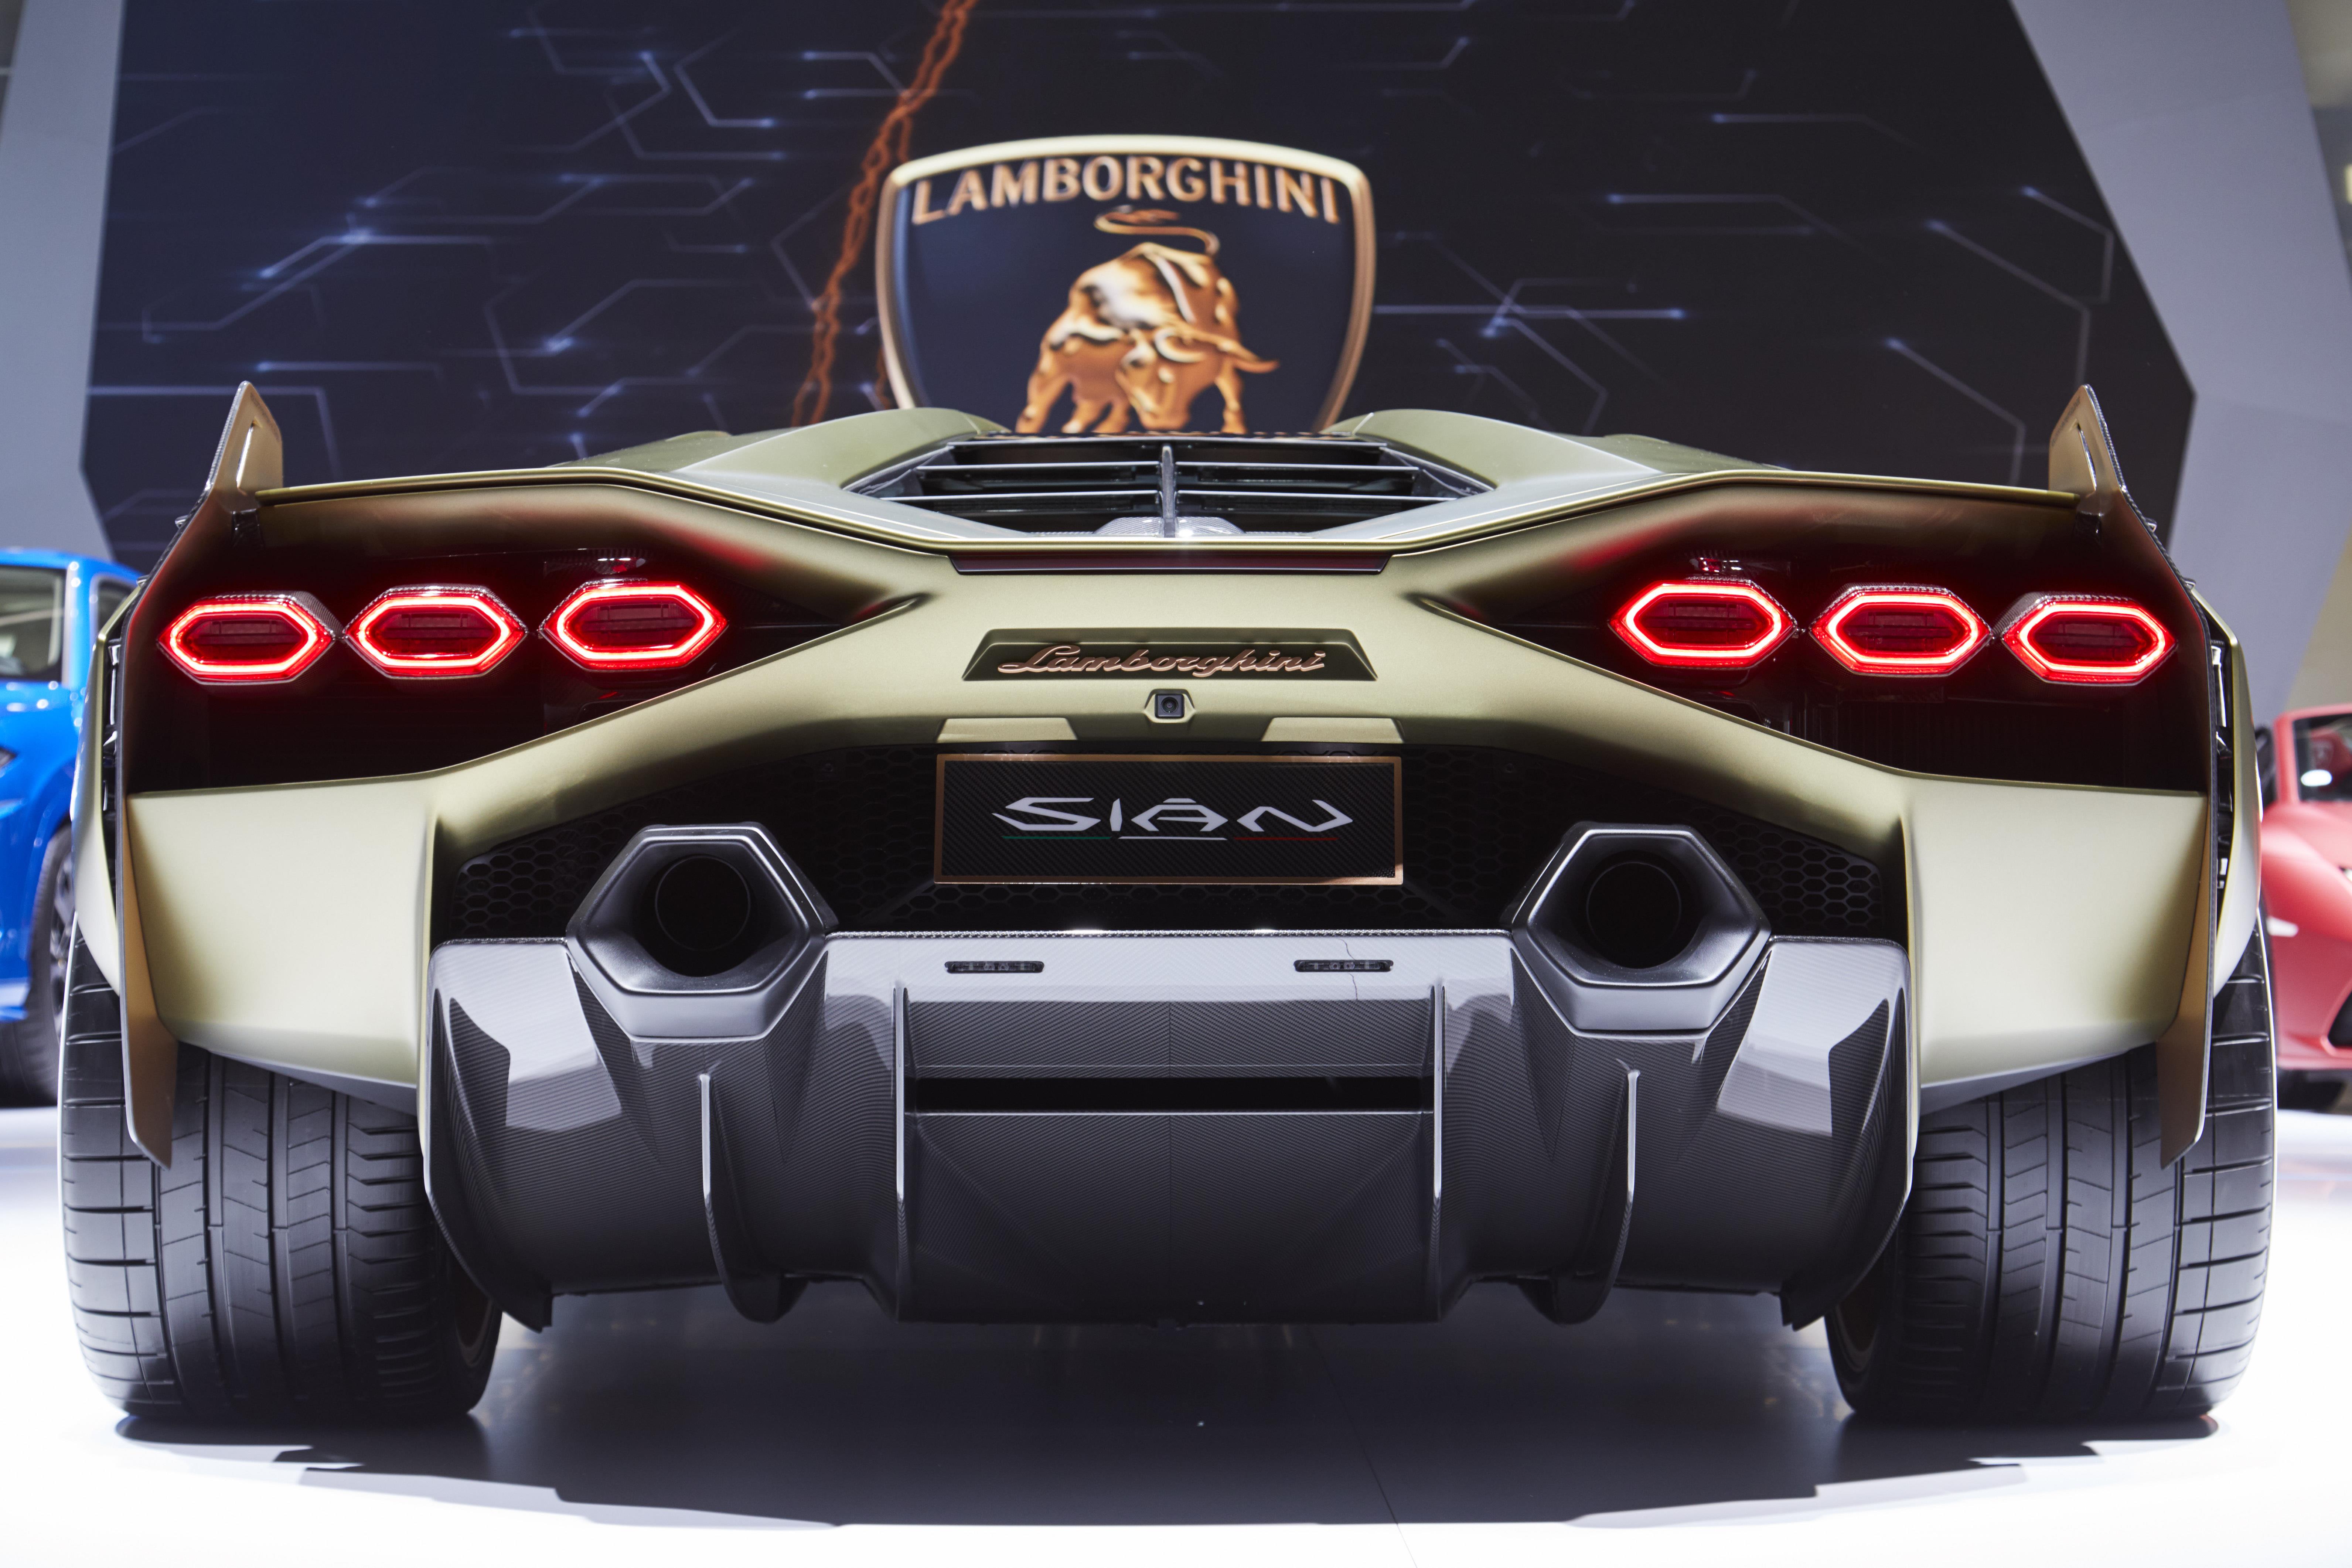 Lamborghini-Sian-FKP-37-IAA-2019-259 | Les Voitures